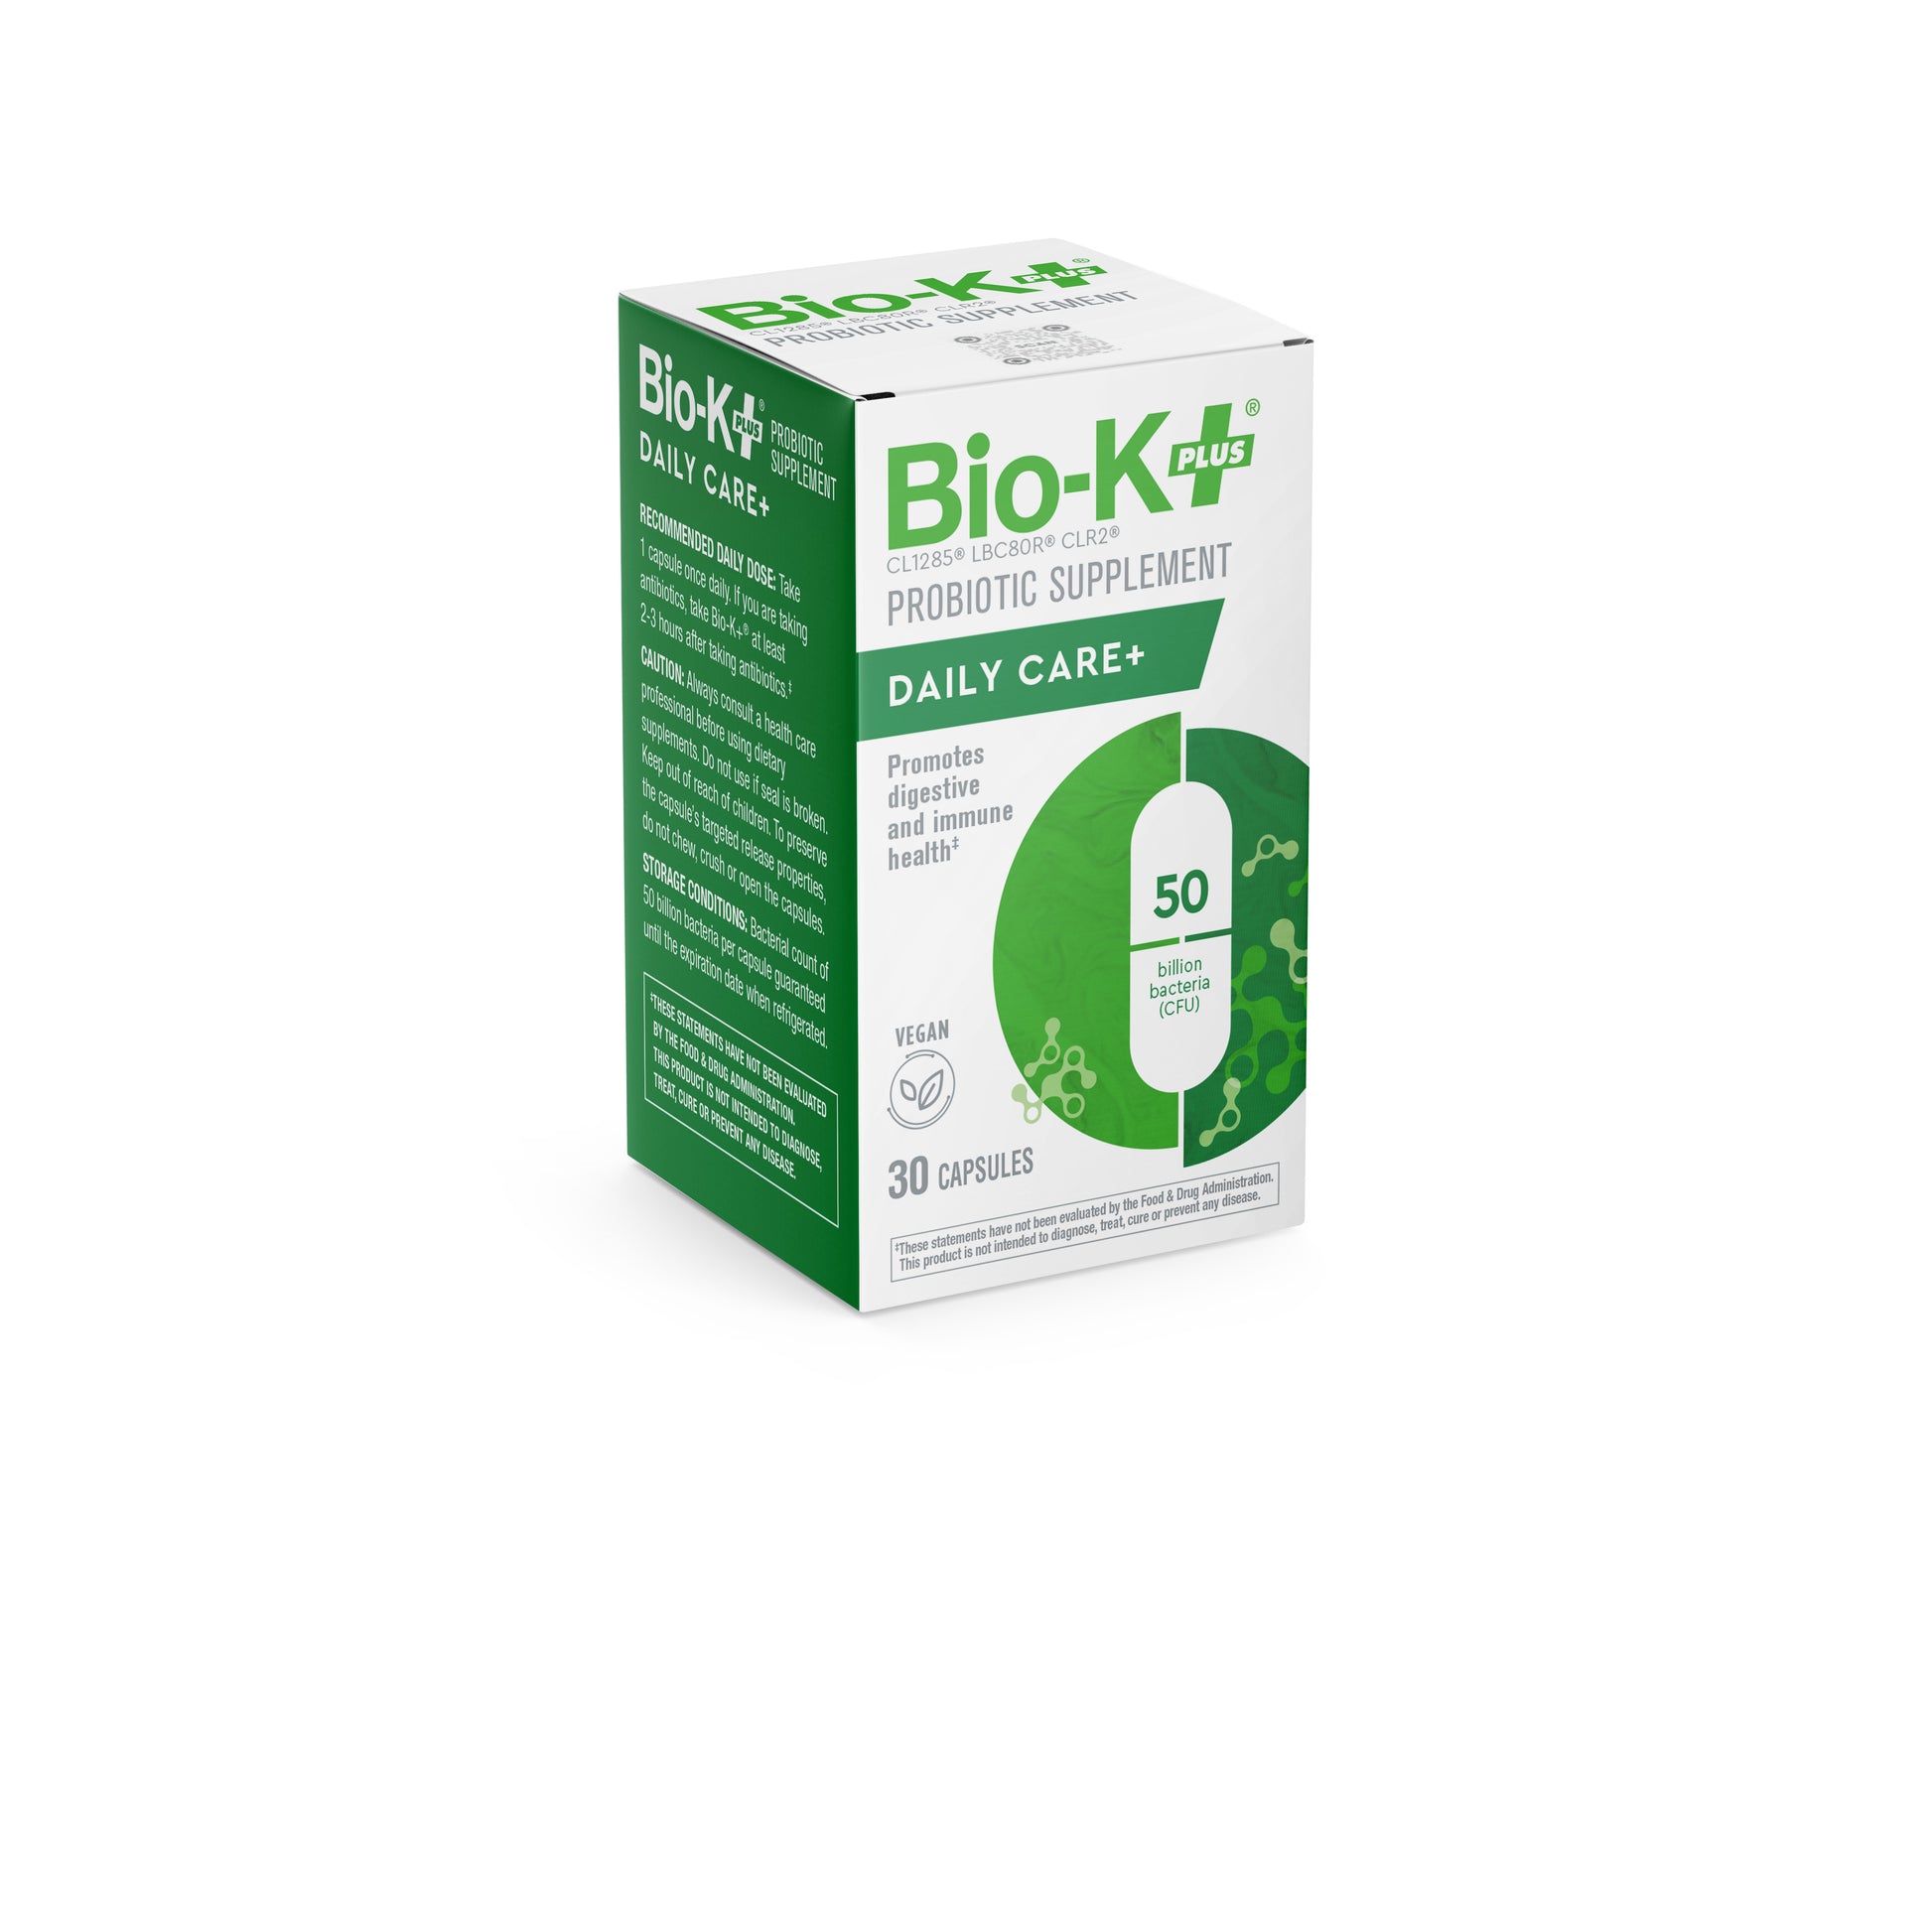 Daily Care+ 50 Billion VEGAN PROBIOTIC CAPSULES Box - Bio-K+